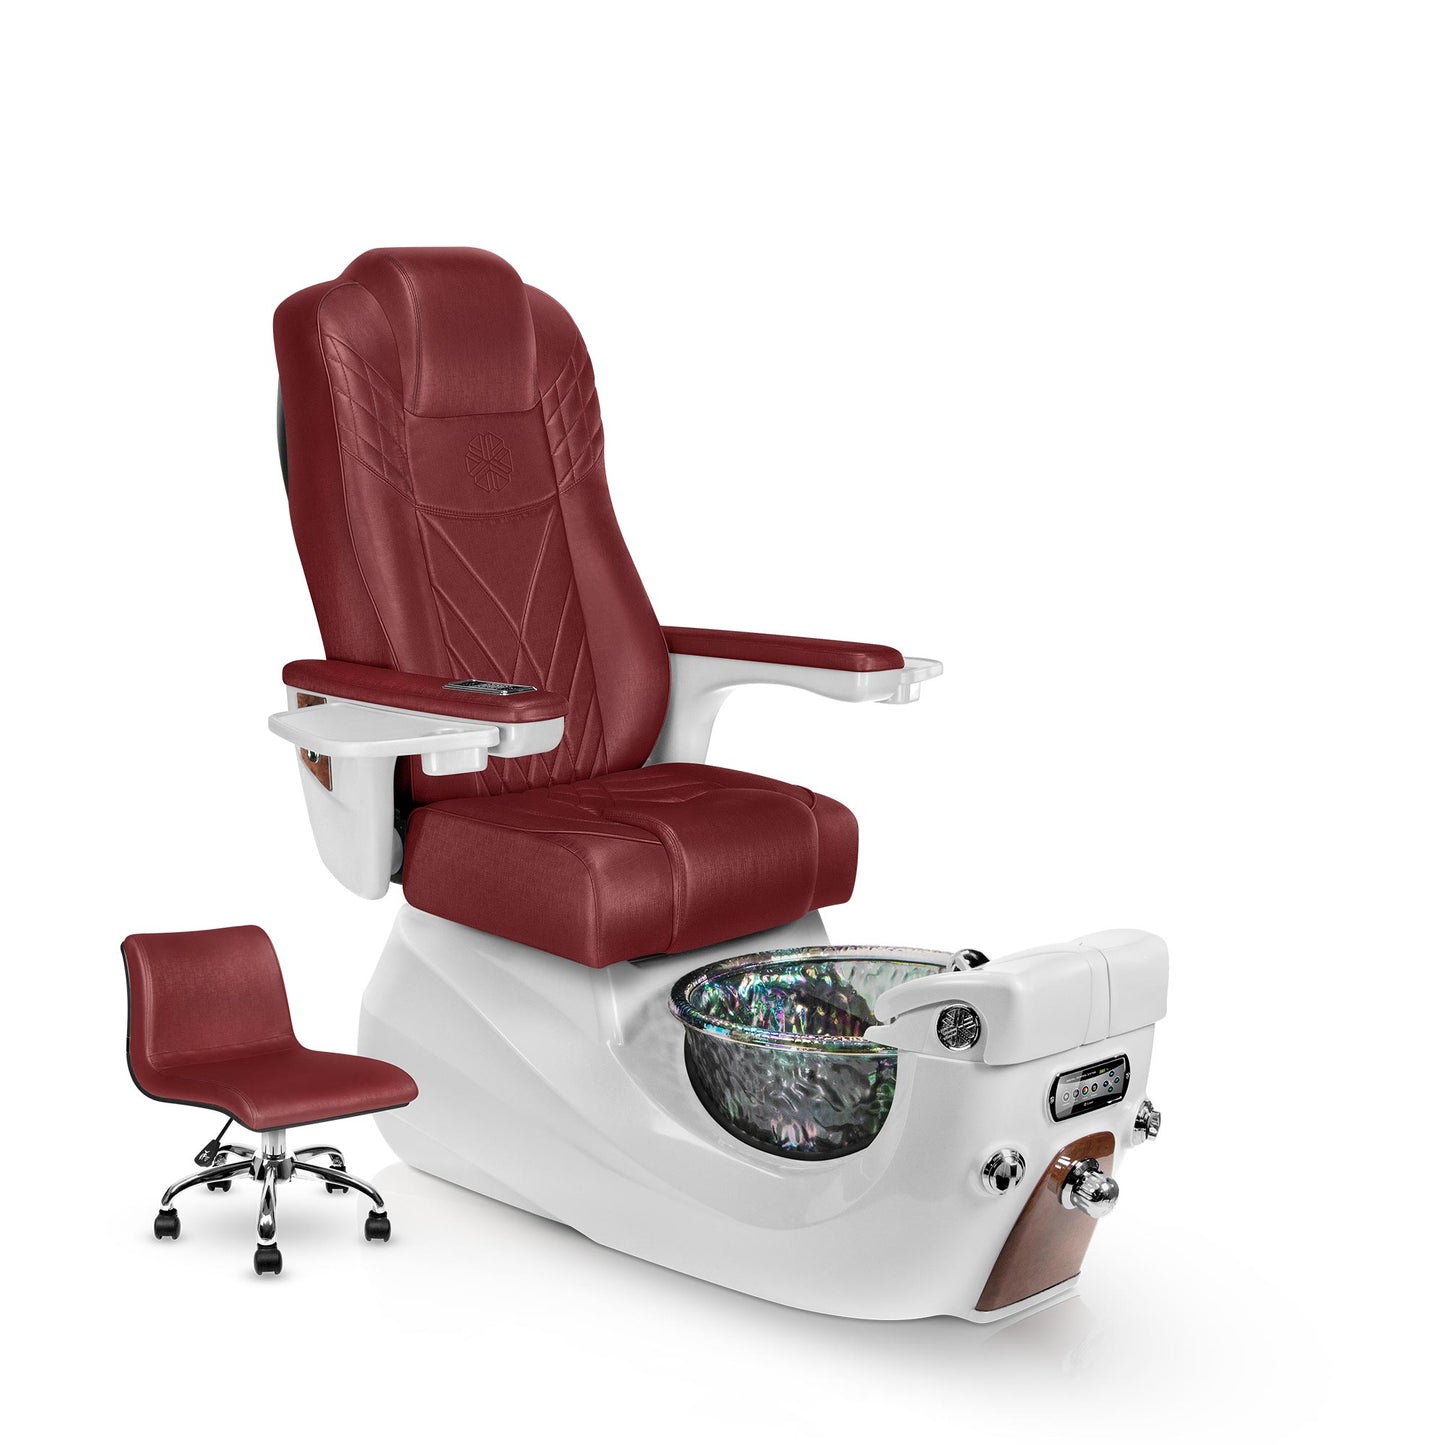 Lexor LIBERTÉ pedicure chair with ruby cushion and white pearl spa base